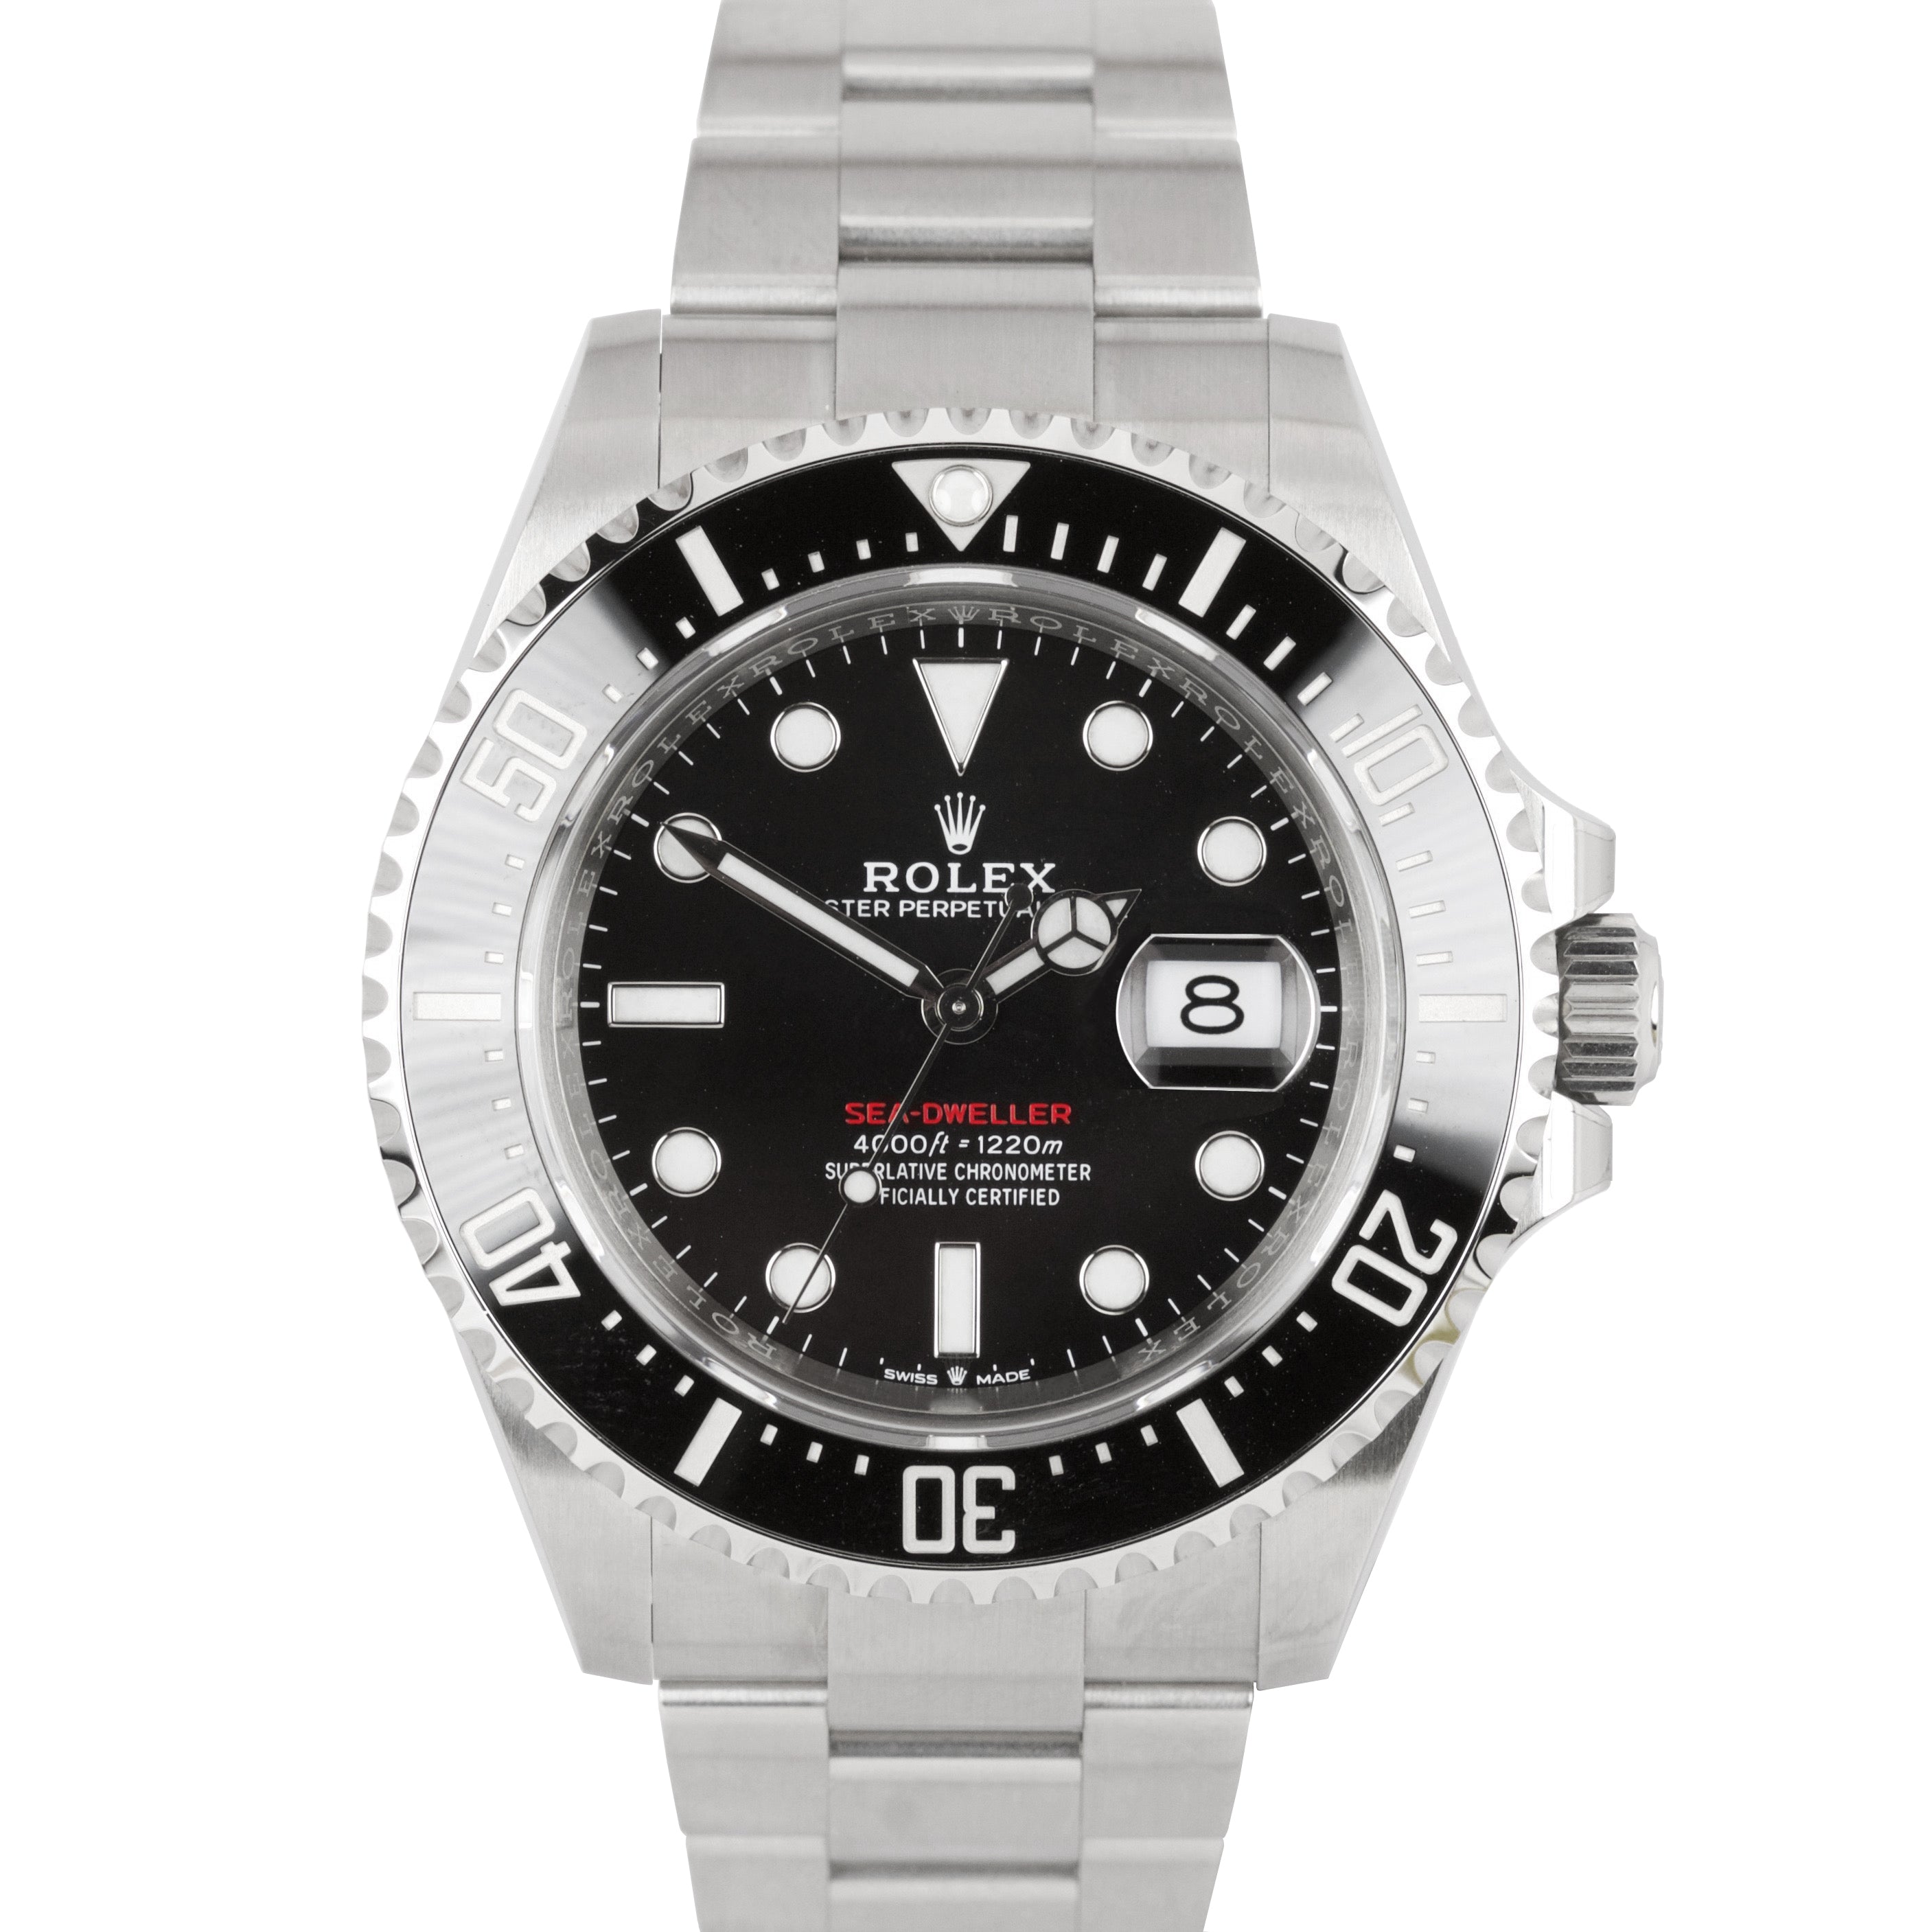 NEW AUG. 2019 Mark II Rolex Red Sea-Dweller 43mm 50th Anniversary 126600 Watch